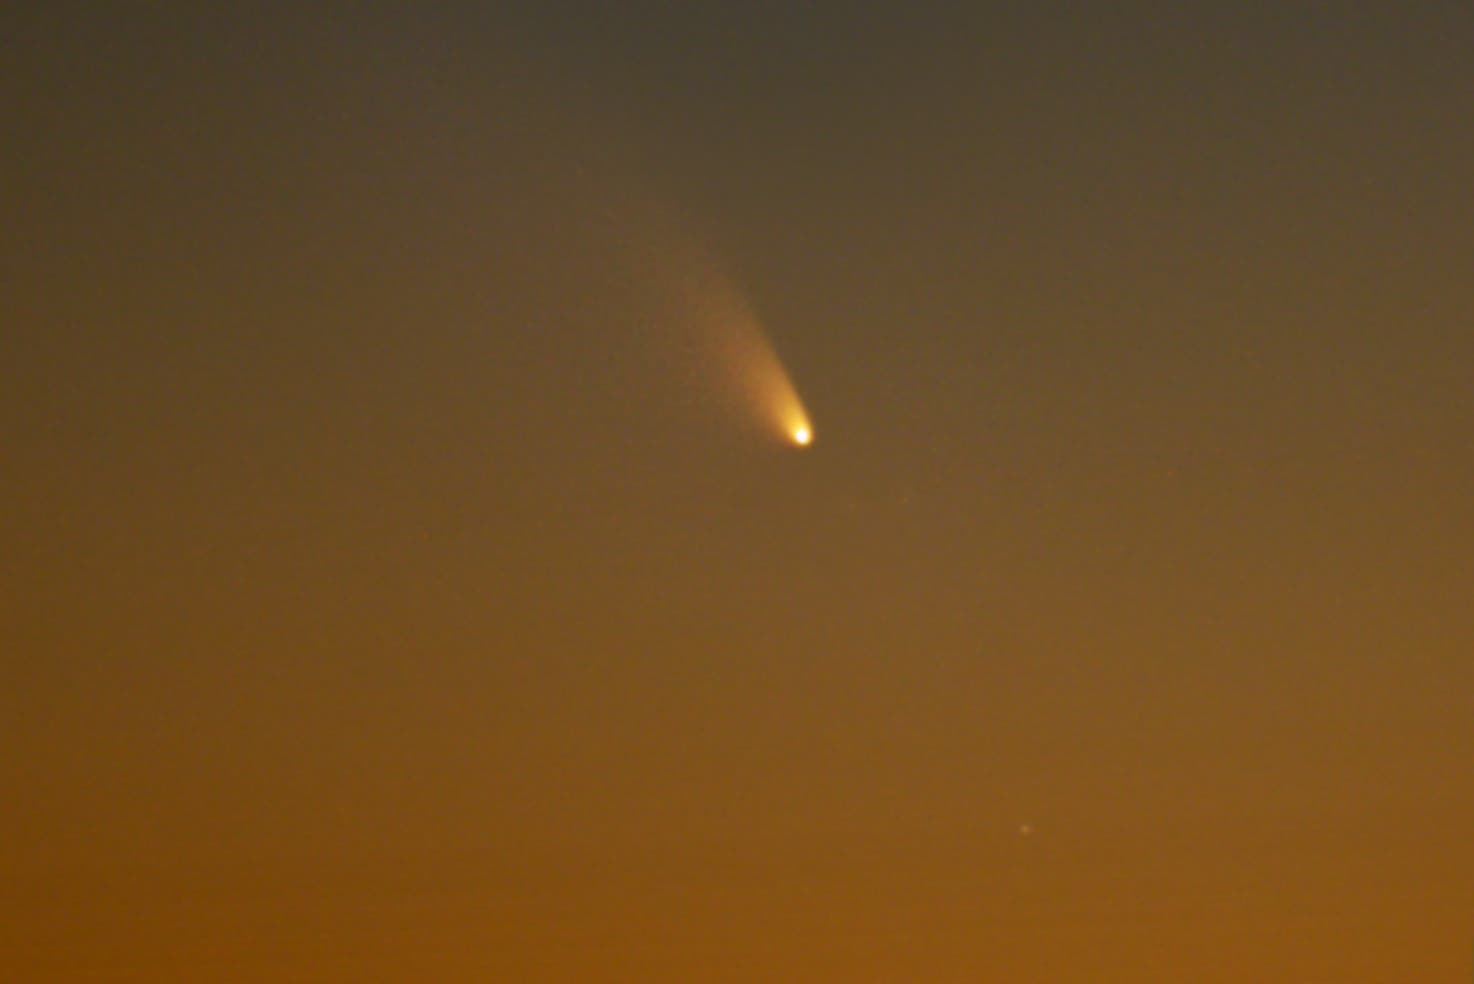 Komet PANSTARRS und Uranus